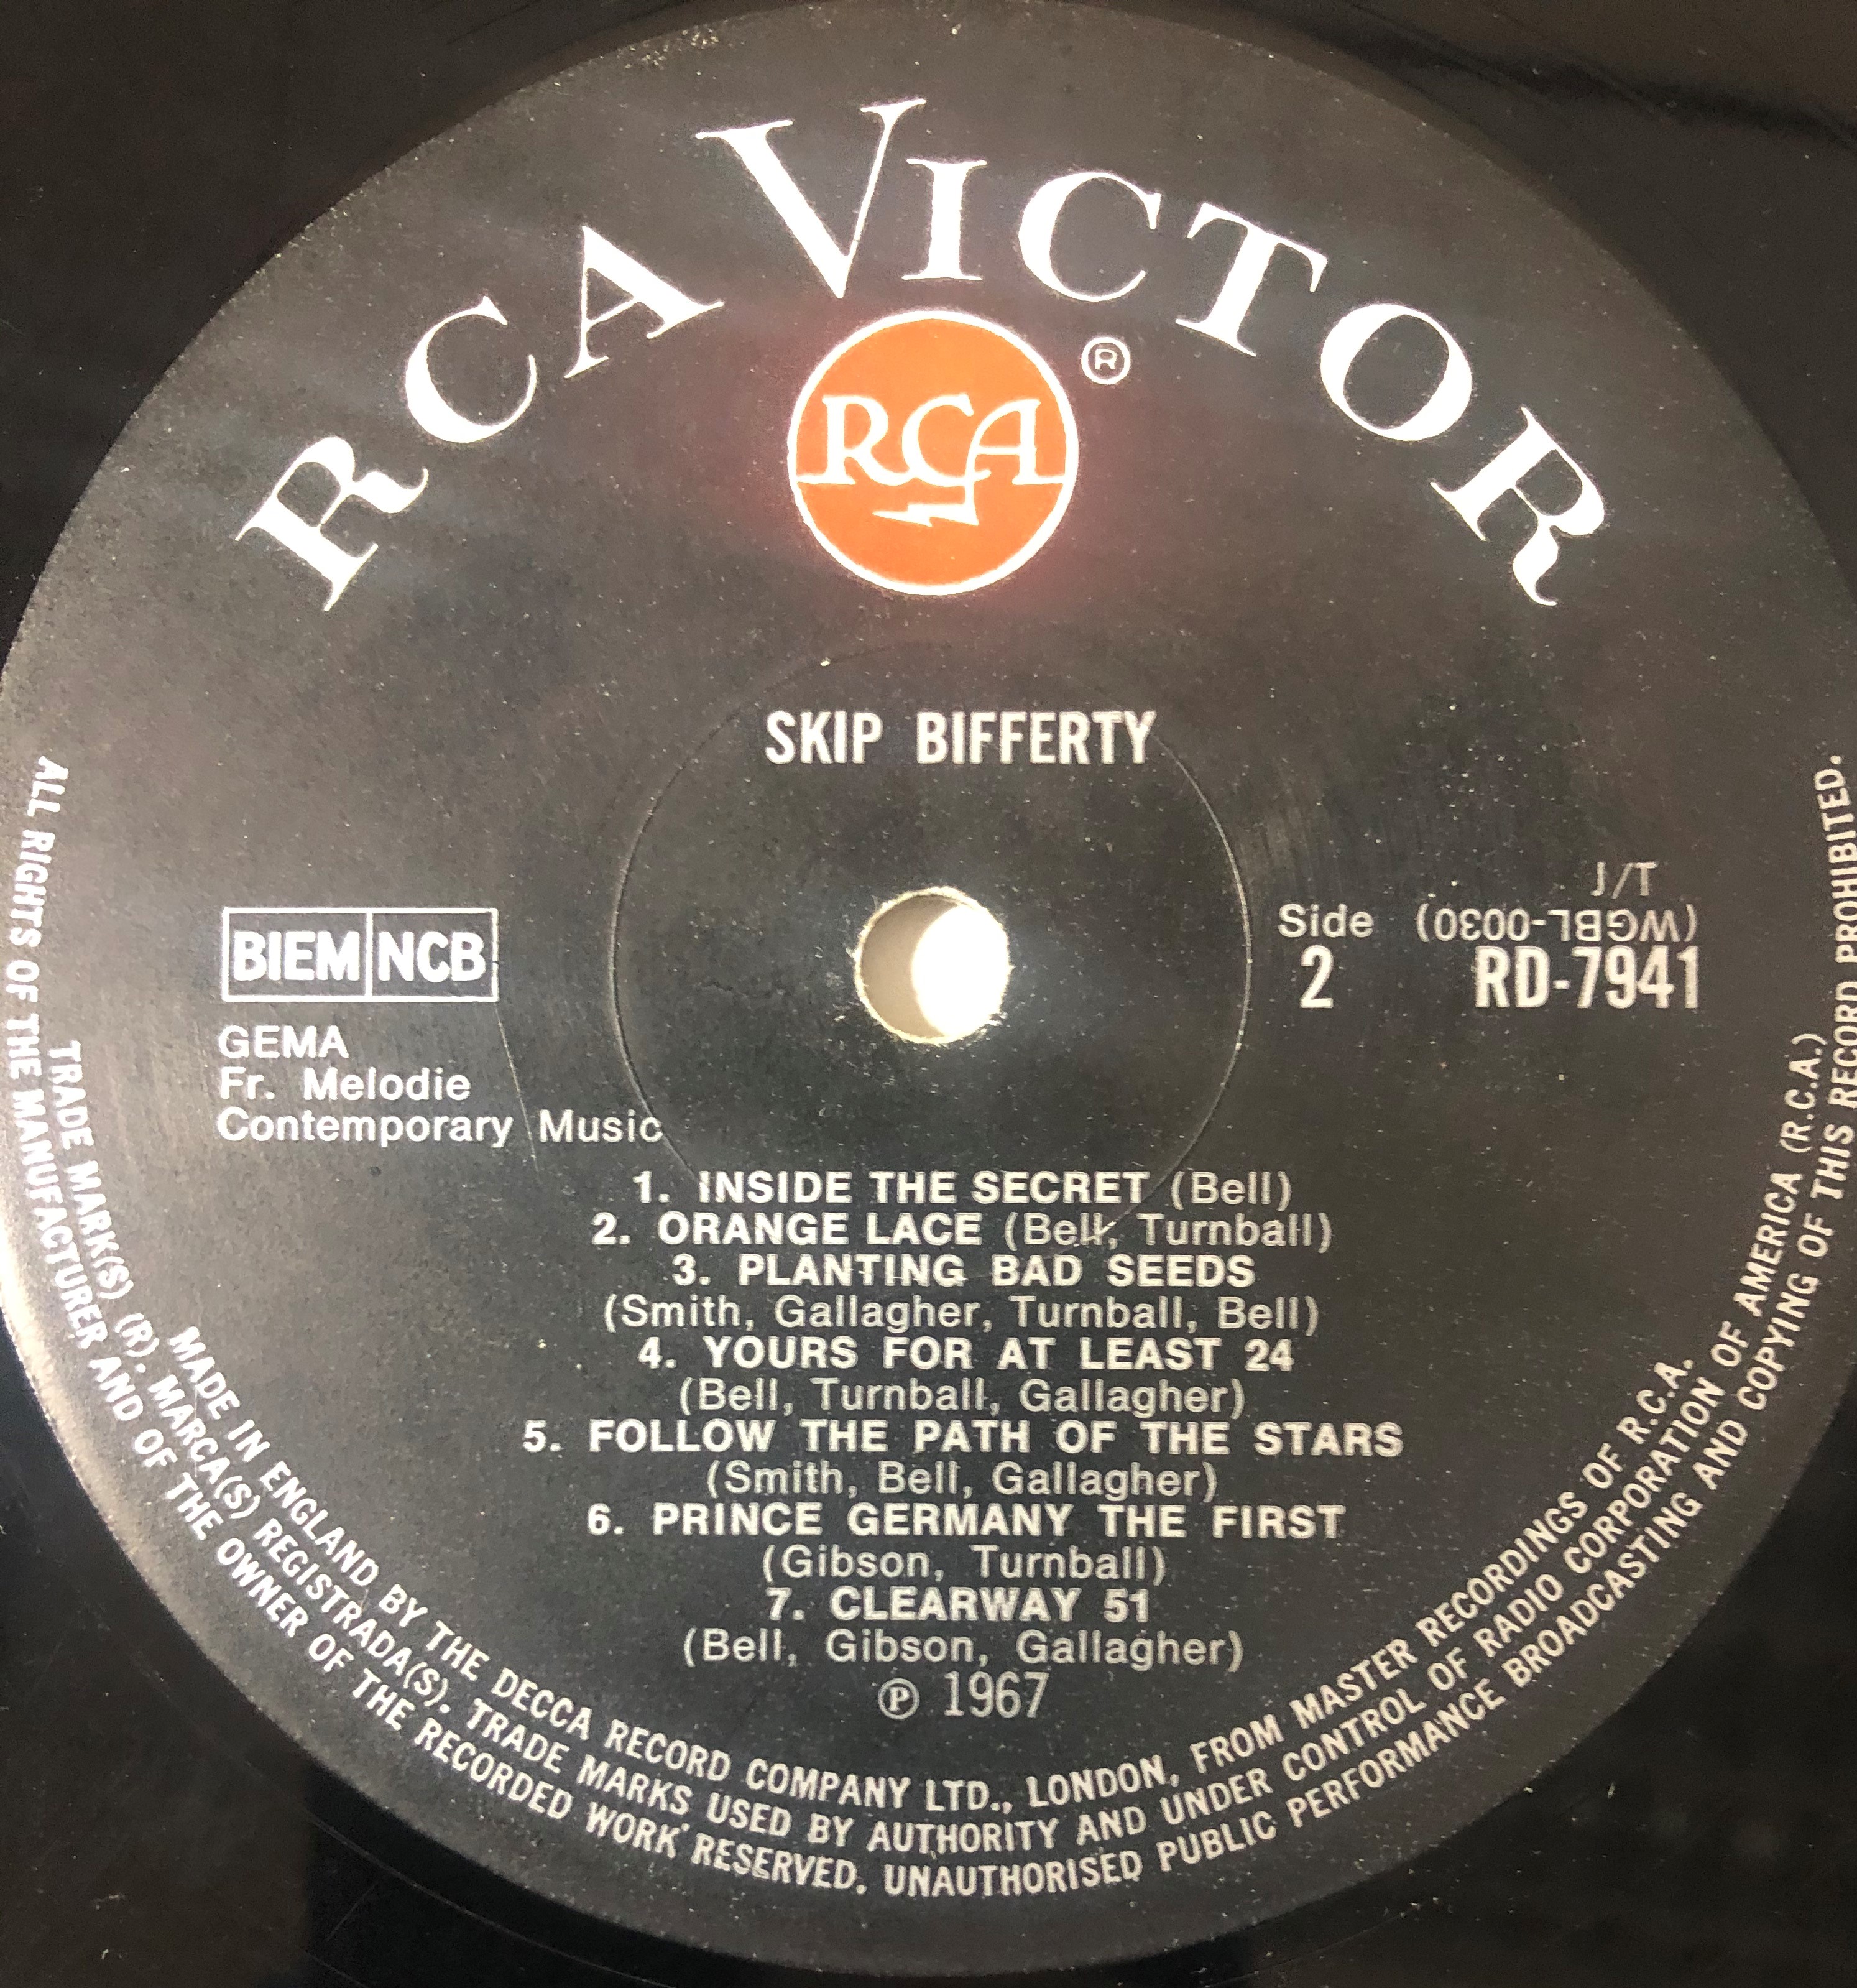 SKIP BIFFERTY - SKIP BIFFERTY LP (ORIGINAL UK MONO PRESSING - RCA VICTOR RD-7941). - Image 6 of 6